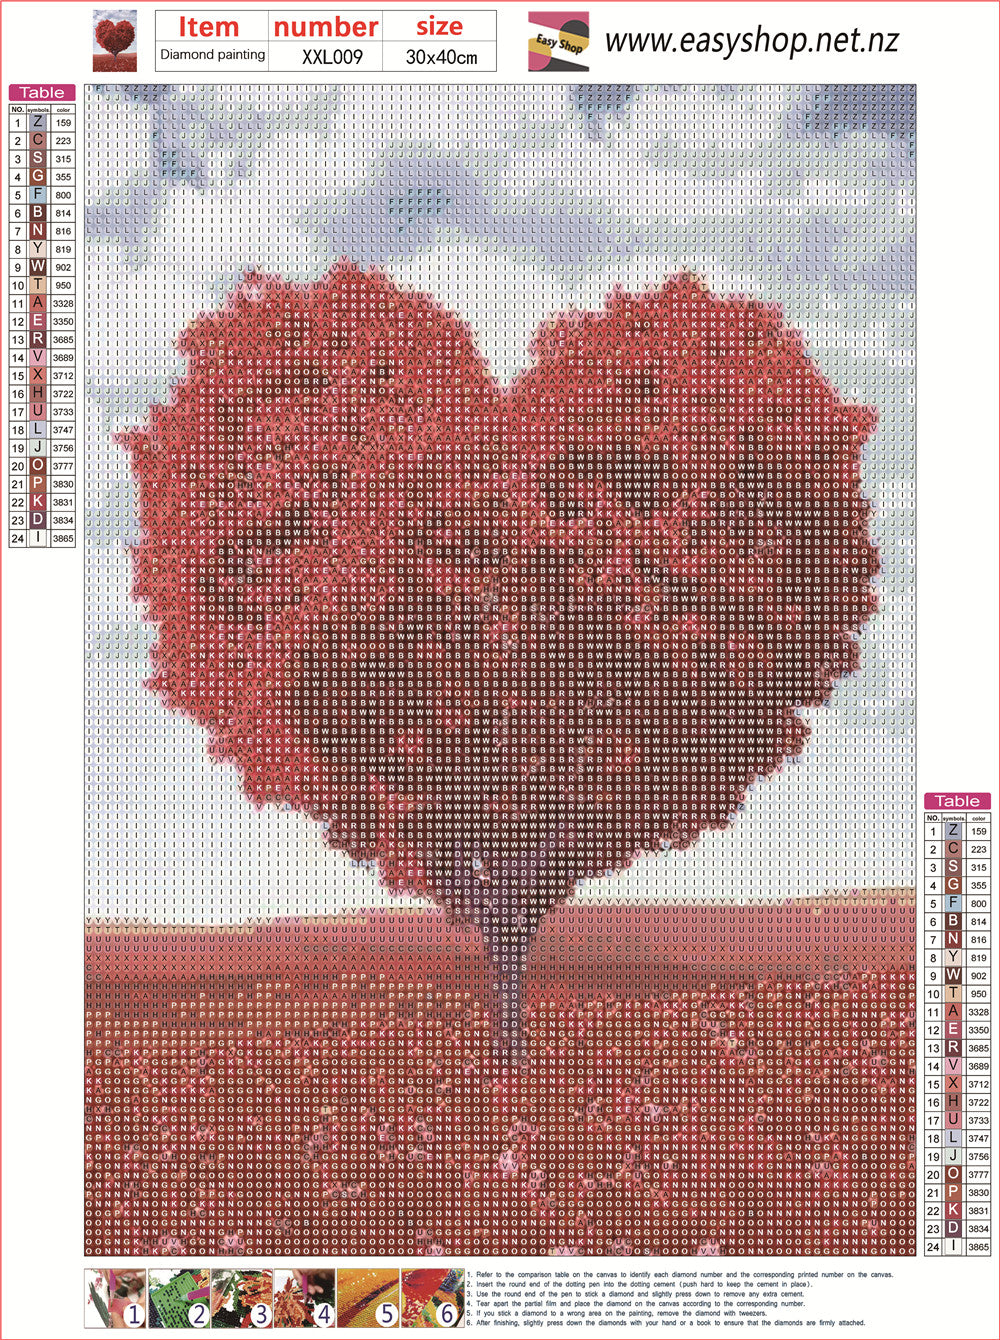 Red Heart Tree 30*40 cms 5D Diamond Painting/ Diamond Art Kit (Full Drill) Quality Poured Glue Canvas SALE